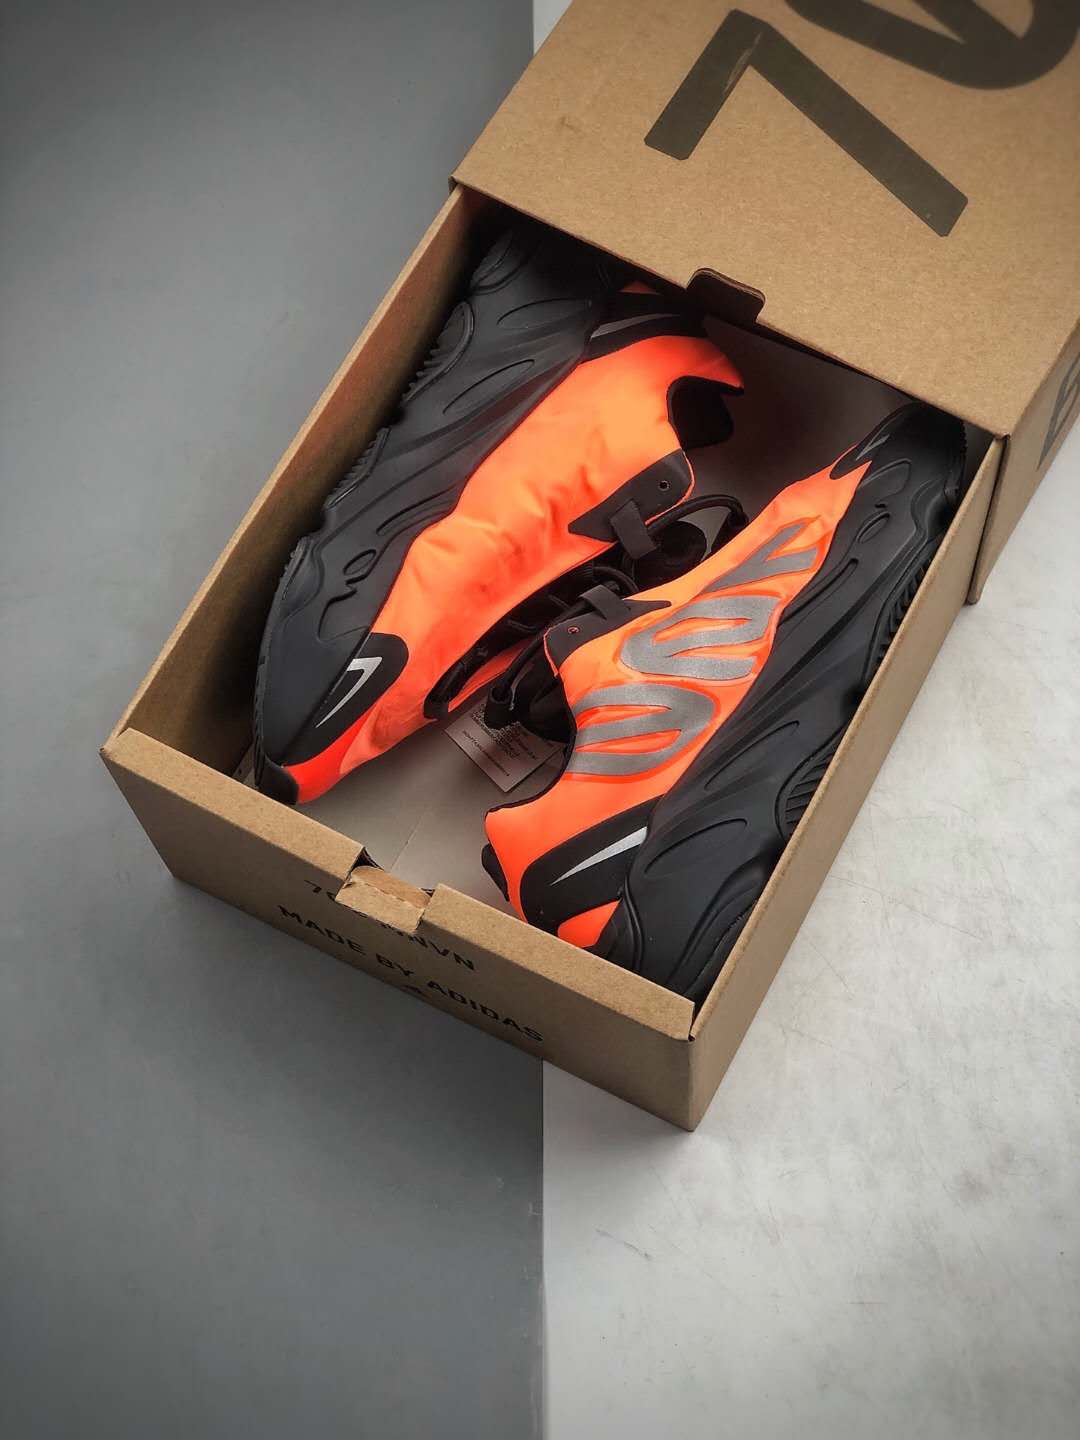 Adidas Yeezy Boost 700 MNVN 'Orange' FV3258 - Vibrant and Stylish Footwear by Adidas